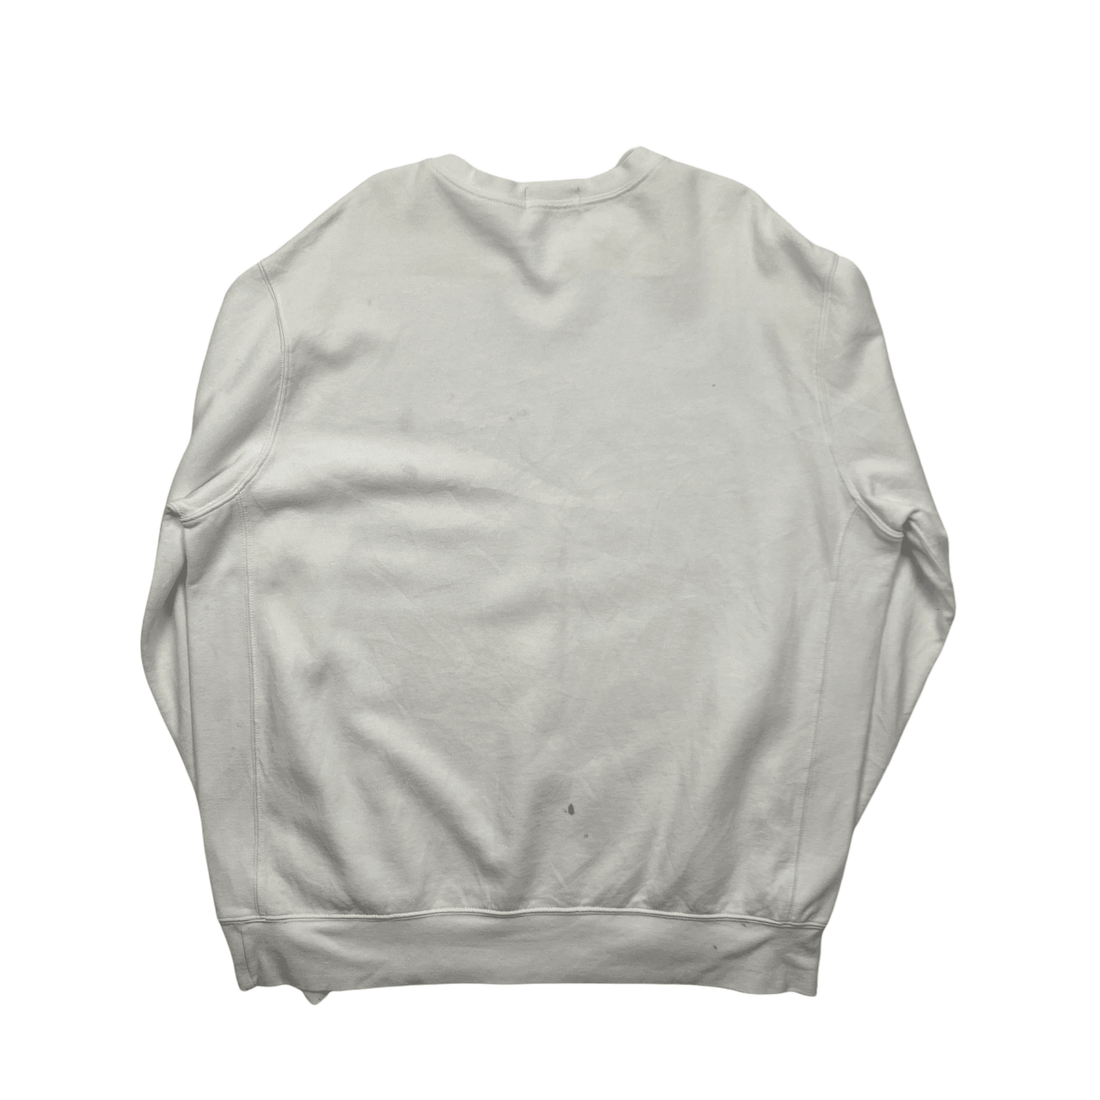 Vintage 90s White Polo Ralph Lauren Sweatshirt - Extra Large - The Streetwear Studio